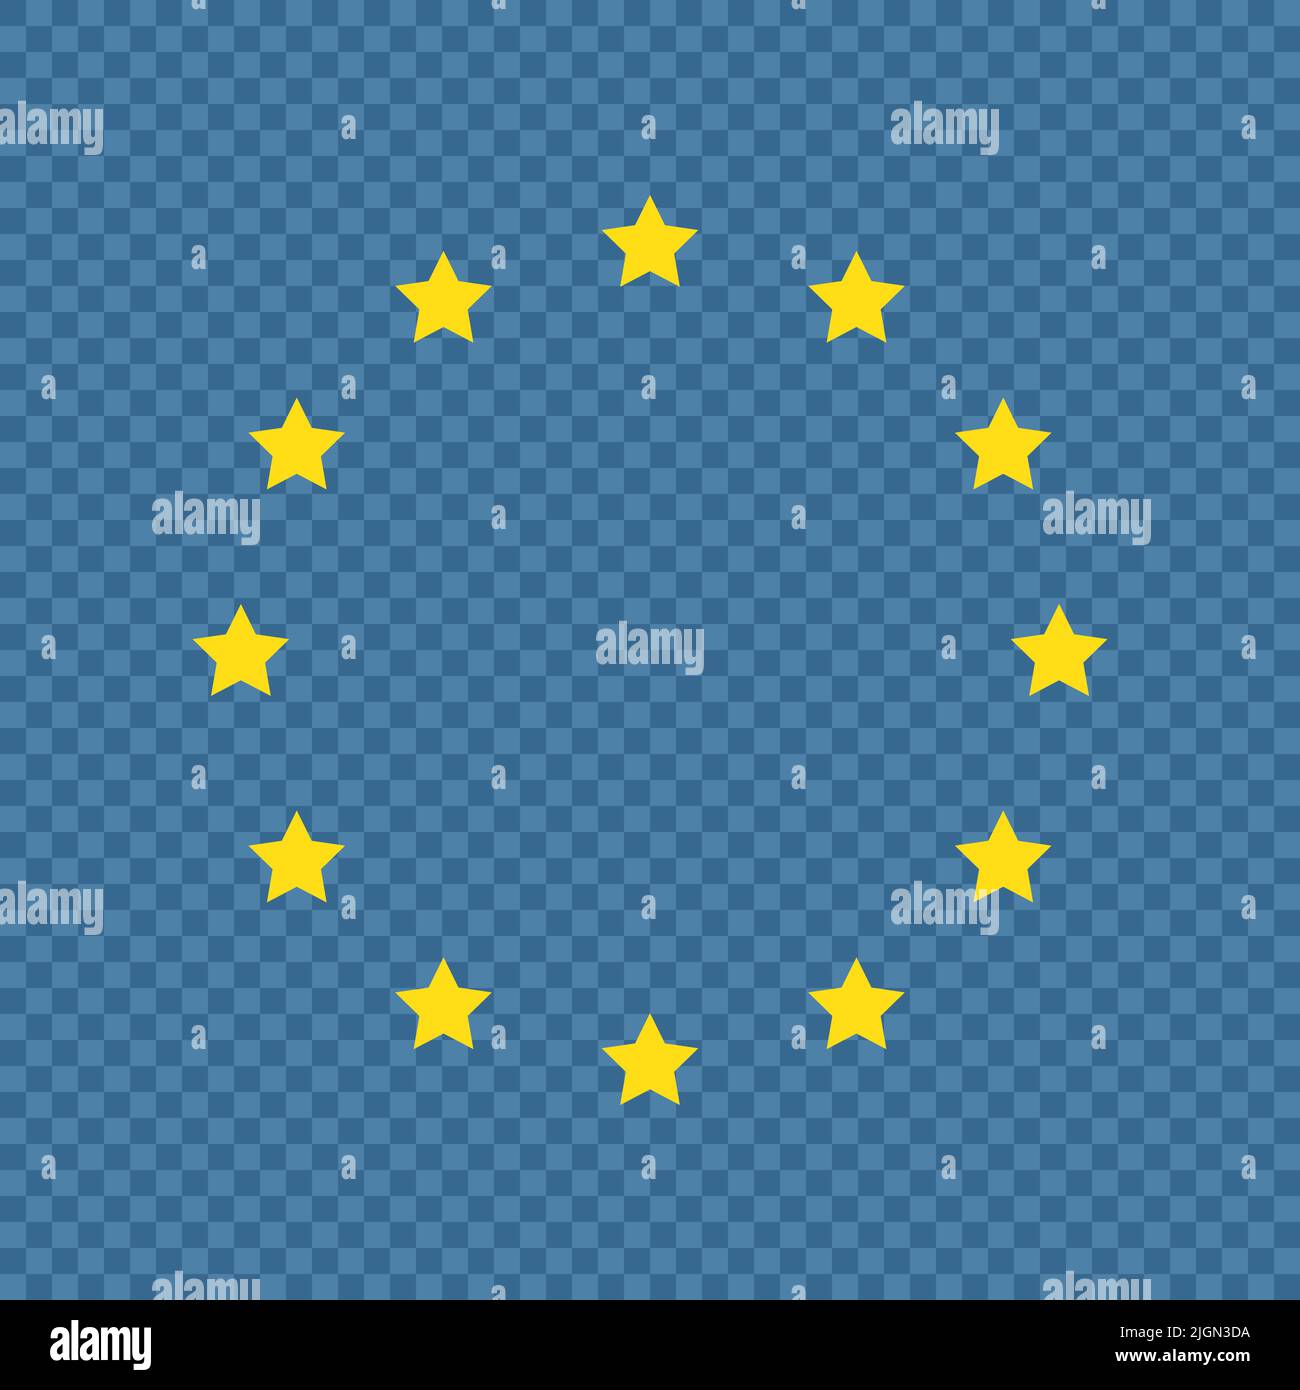 Europe union star vector illustration Stock Vector